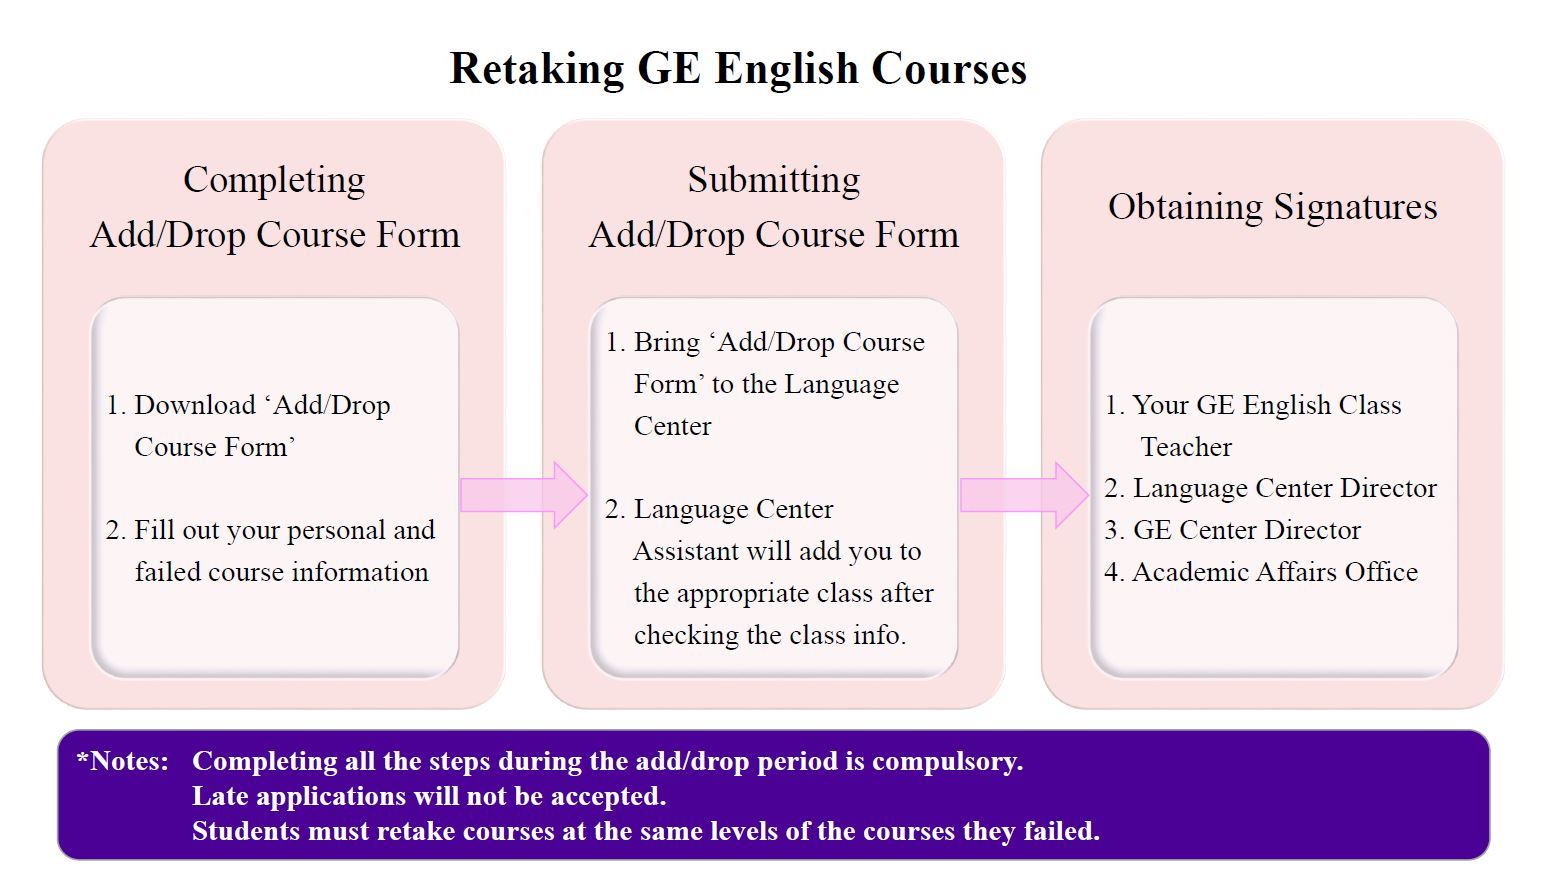 03_Retaking GE English Courses